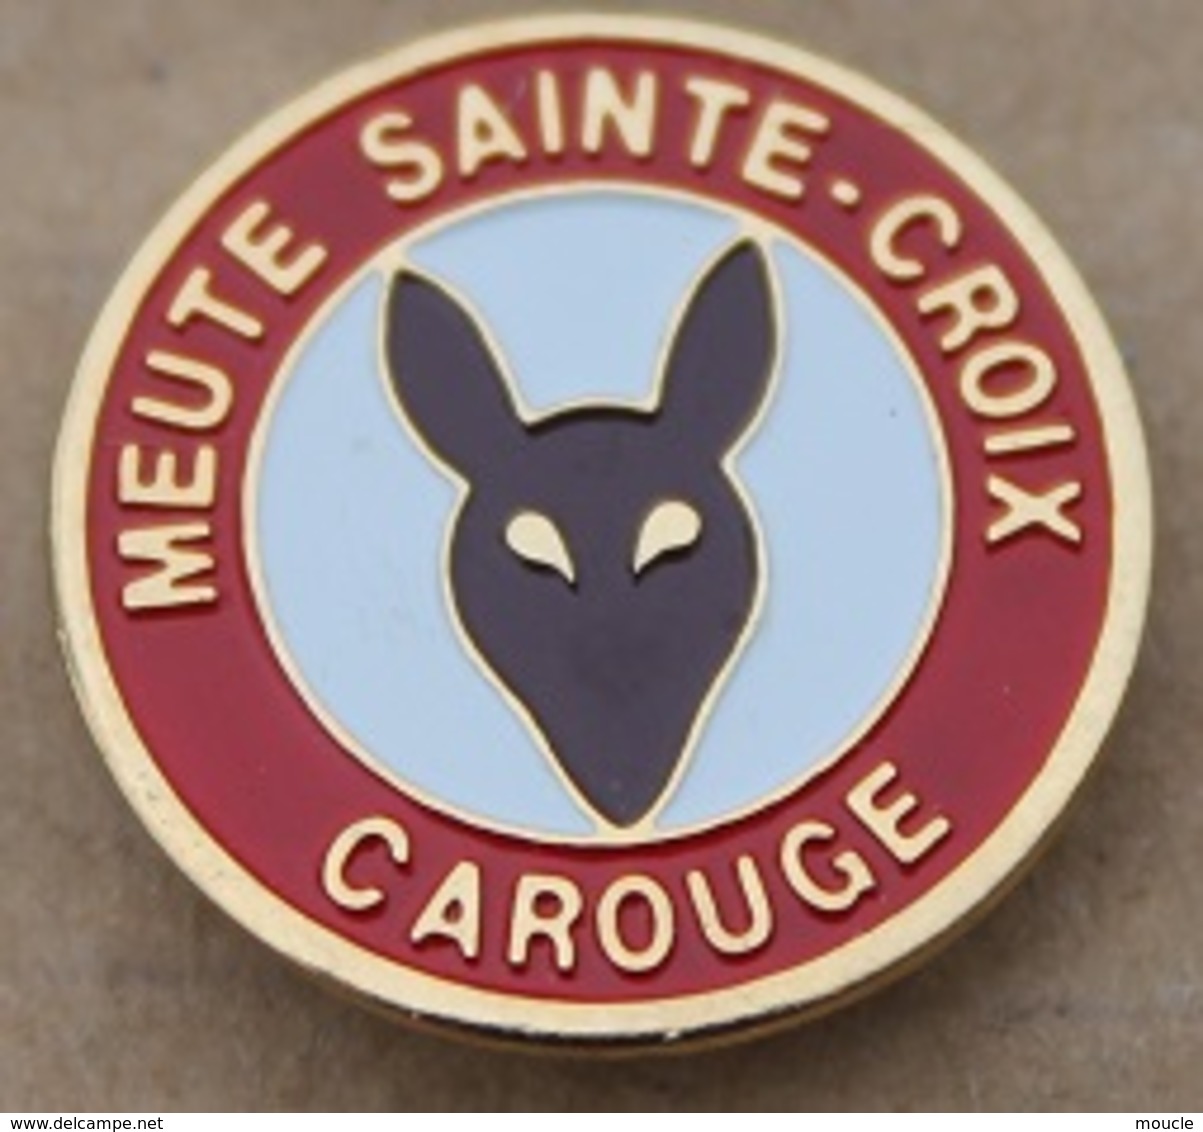 SCOUTS - MEUTE SAINTE-CROIX - CAROUGE - GENEVE - SUISSE - RENARD   -        (20) - Asociaciones